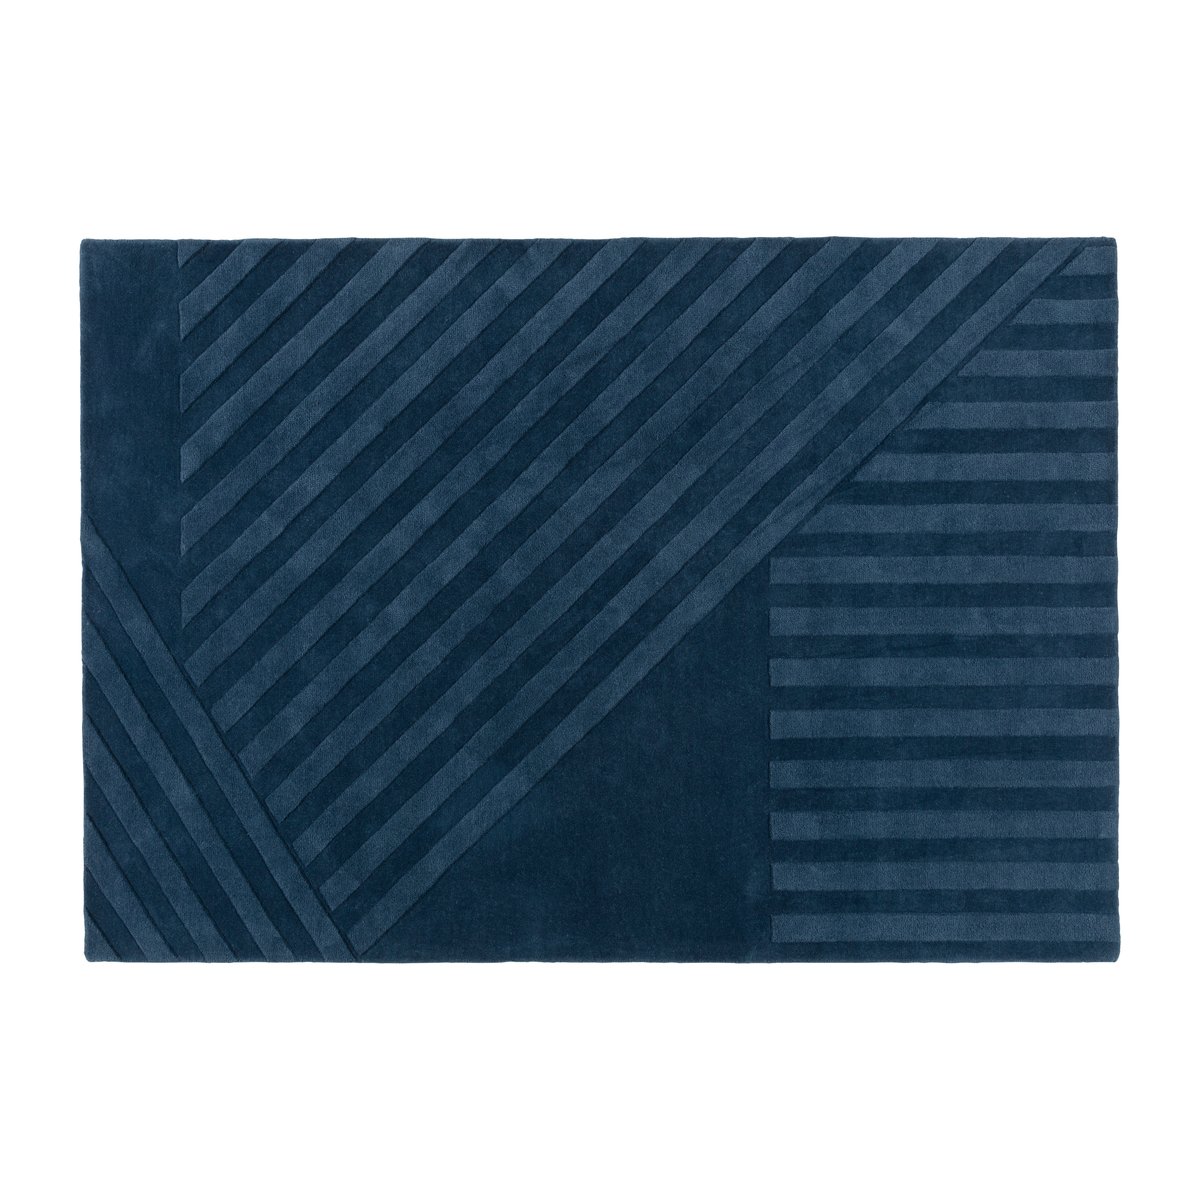 NJRD Levels villamatto stripes sininen 170×240 cm